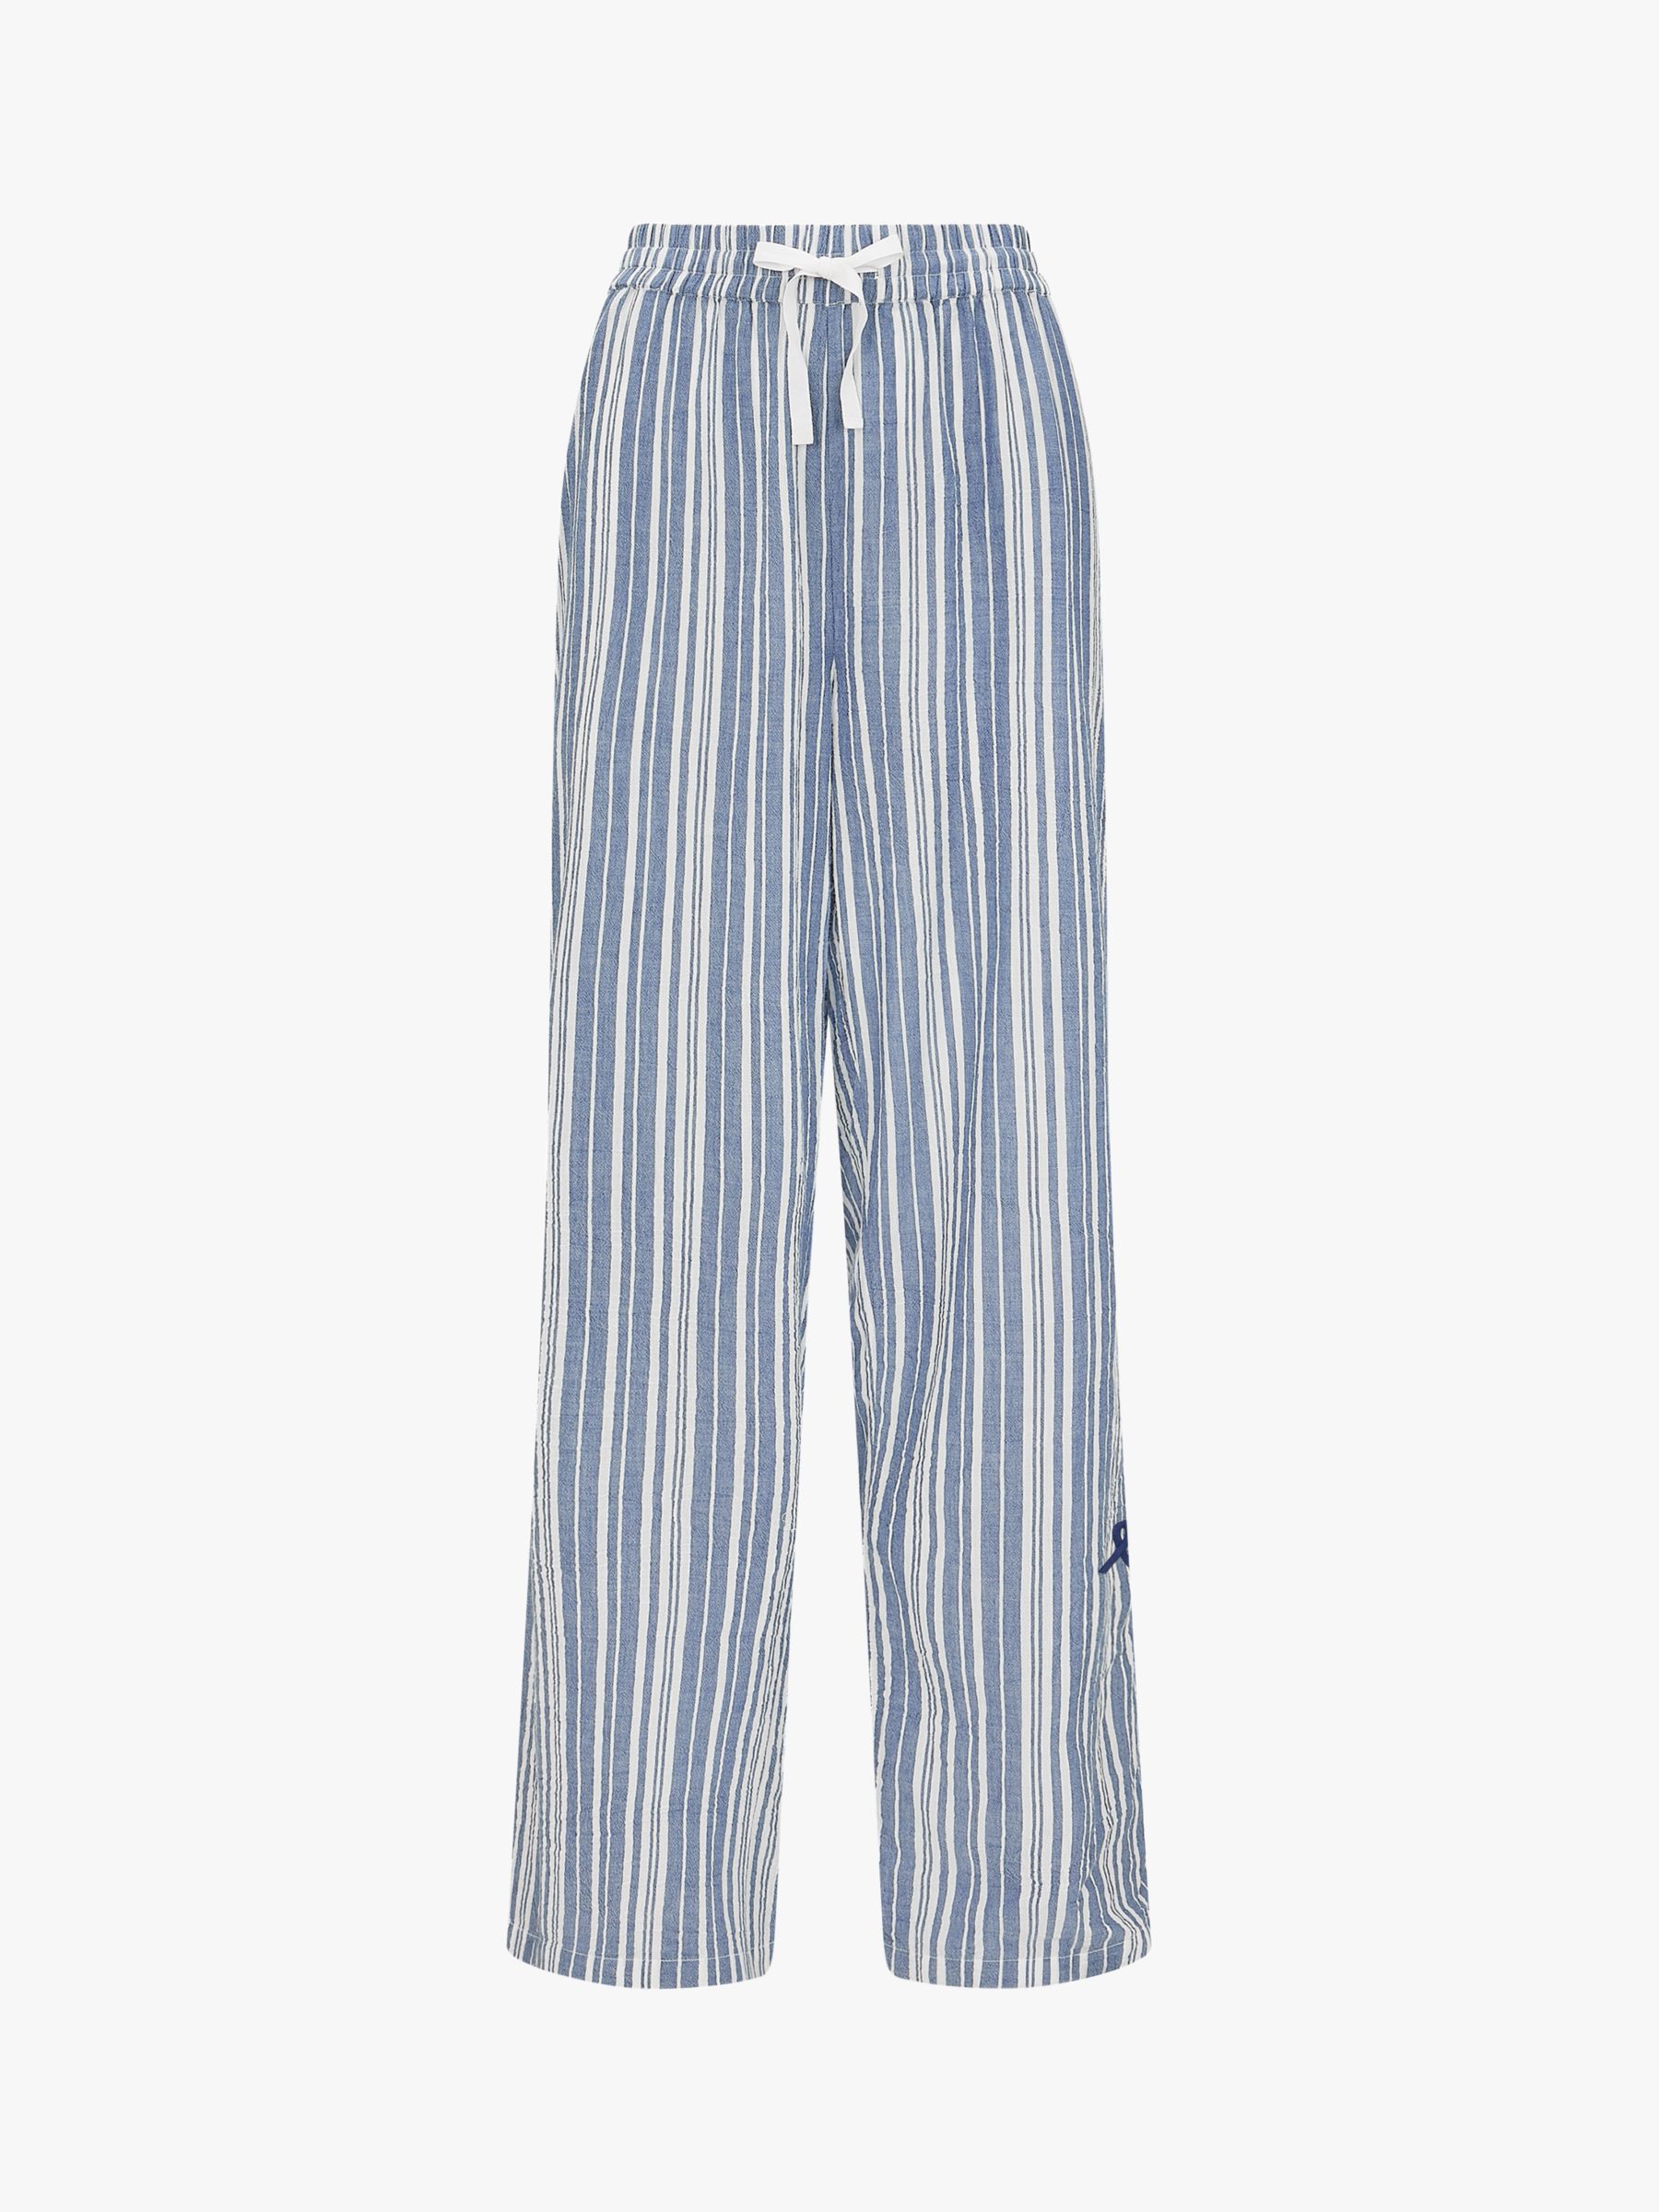 Buy Nudea The PJ Trouser Pyjama Bottoms Online at johnlewis.com